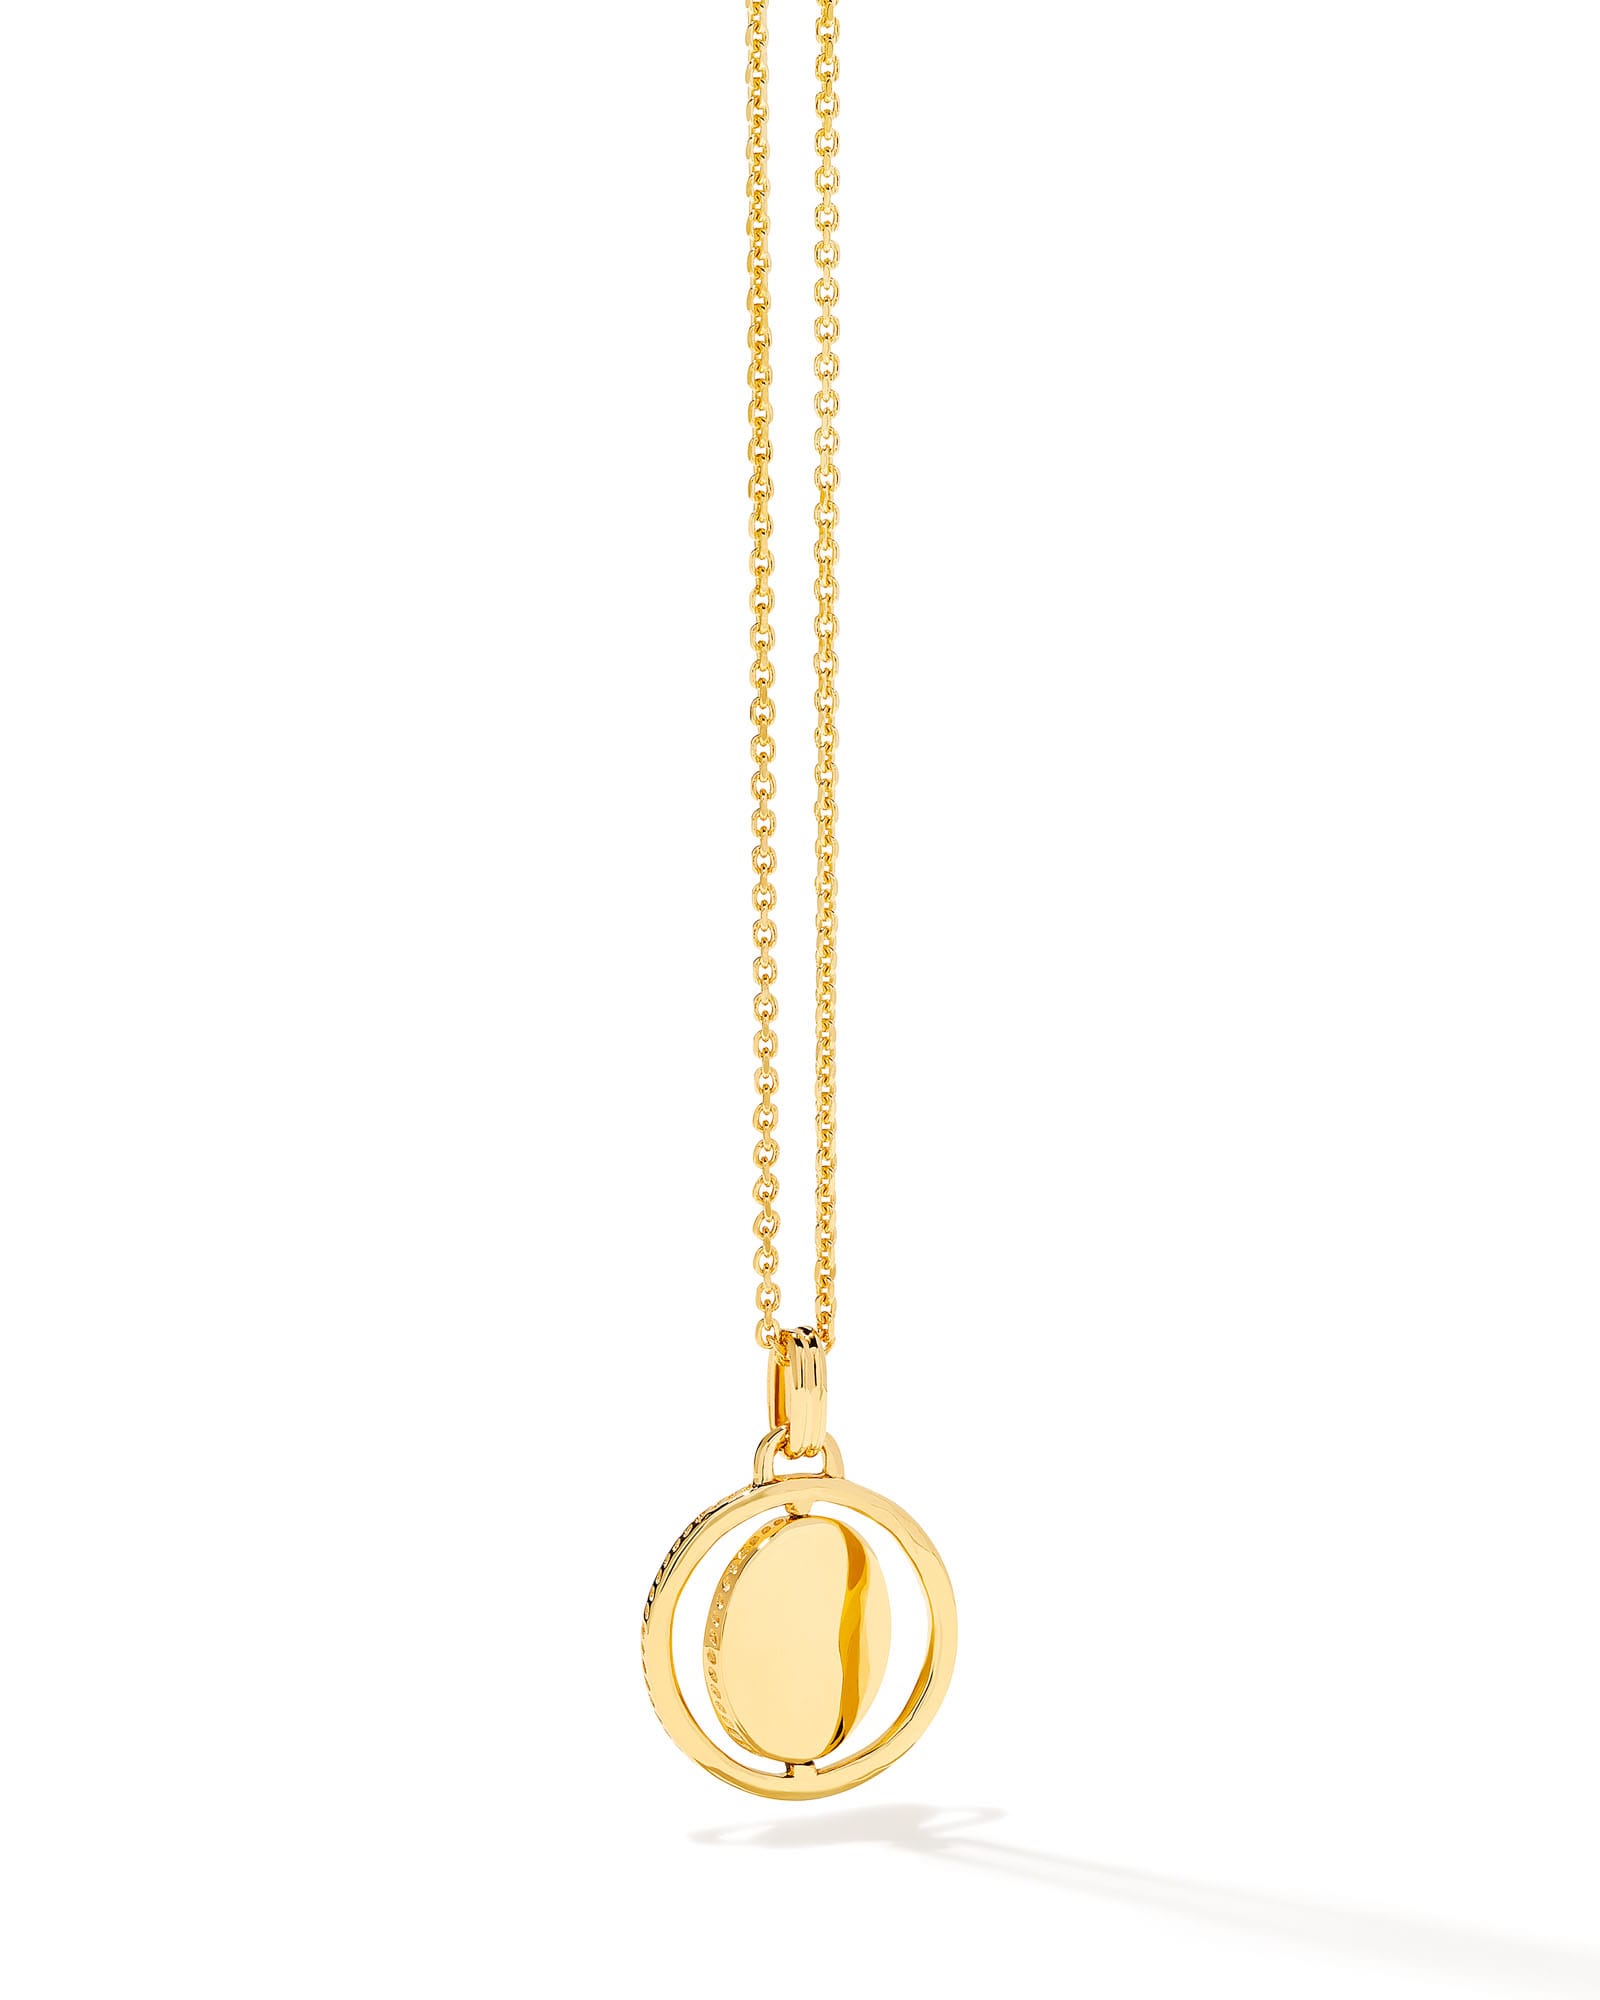 Spinning Hammered Pendant Necklace in 18k Gold Vermeil image number 3.0